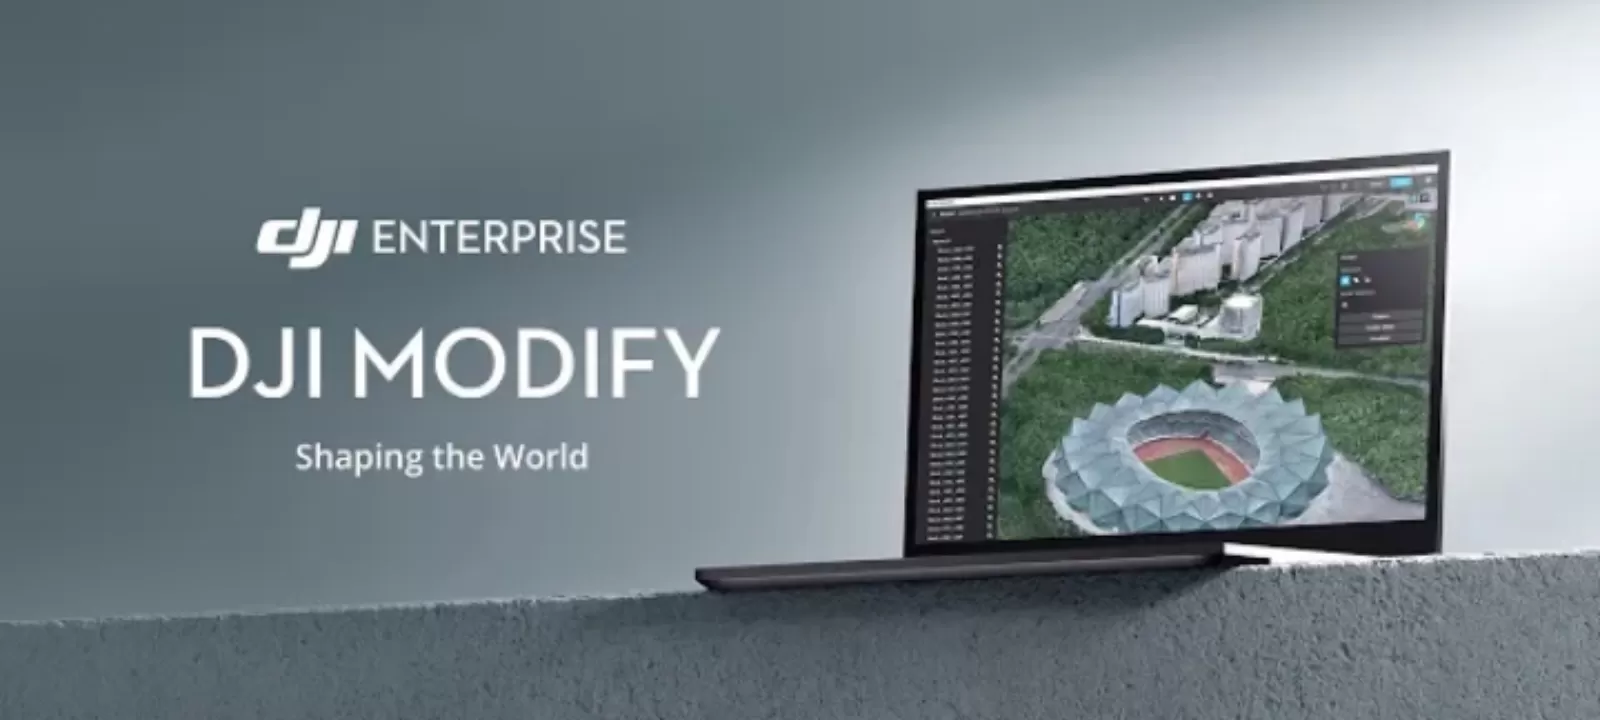 Introducing DJI Modify Shaping The World